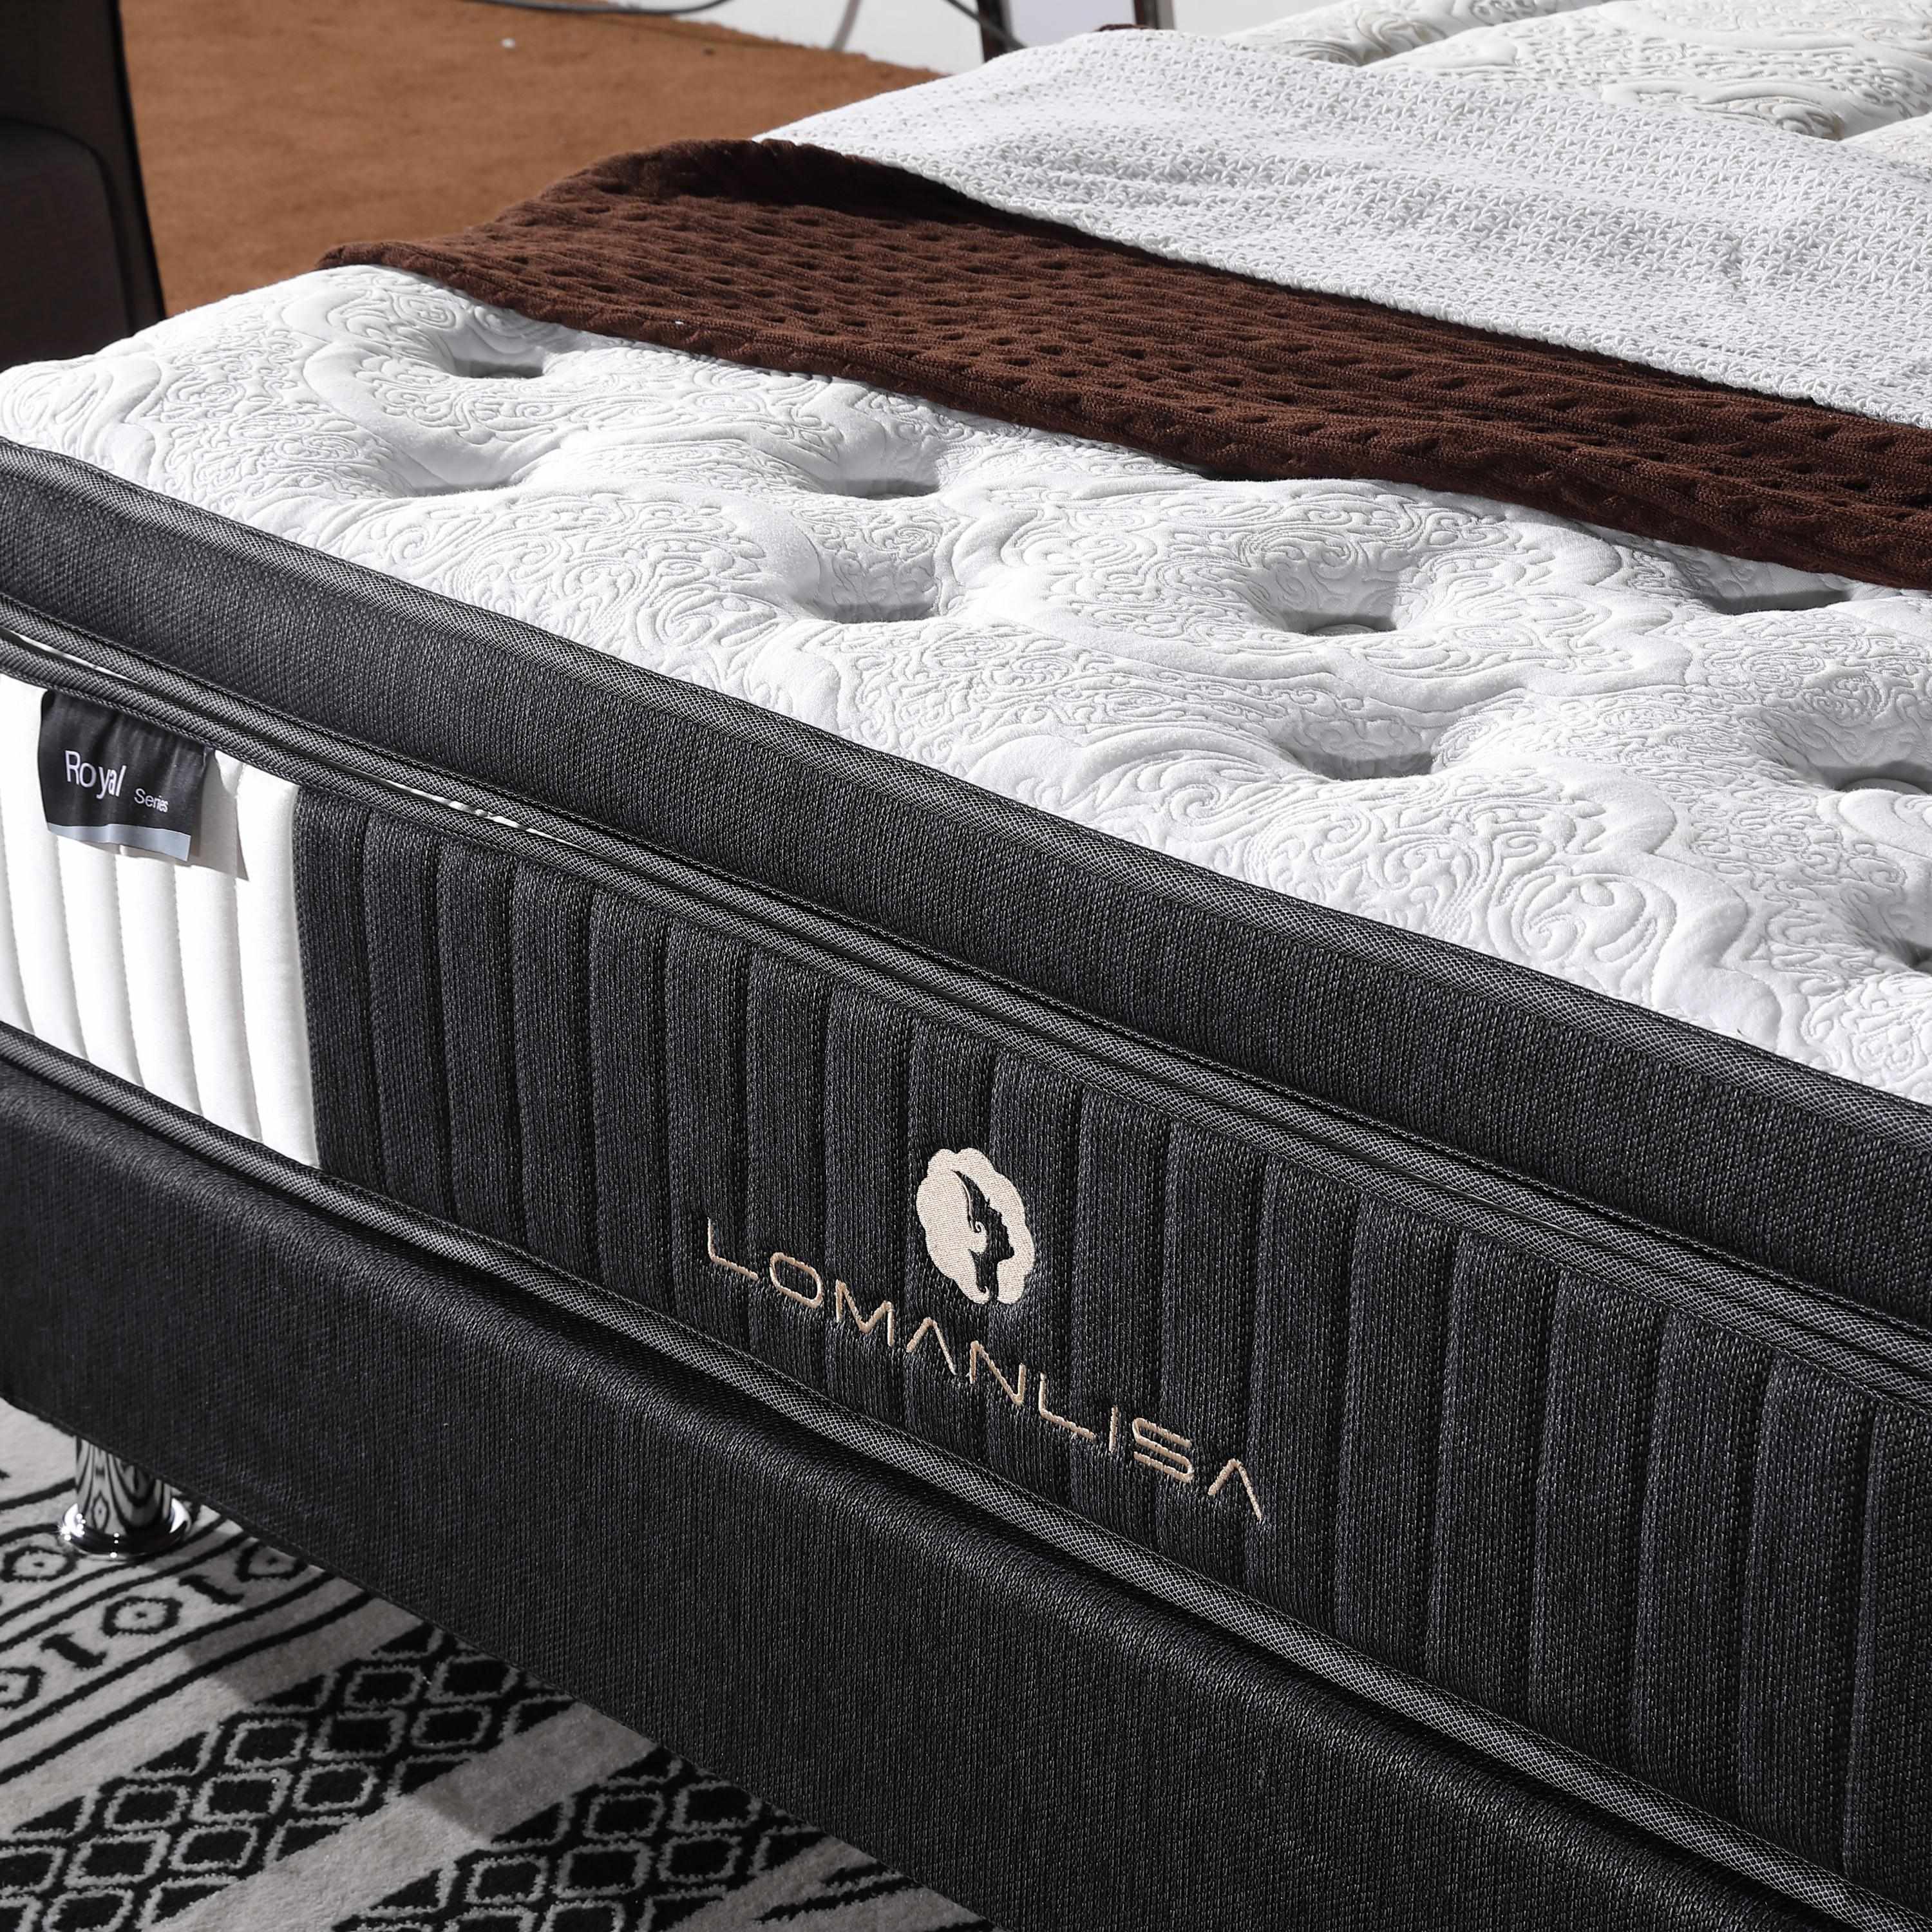 JLH-full mattress and boxspring set | Roll-Up Mattress | JLH-1